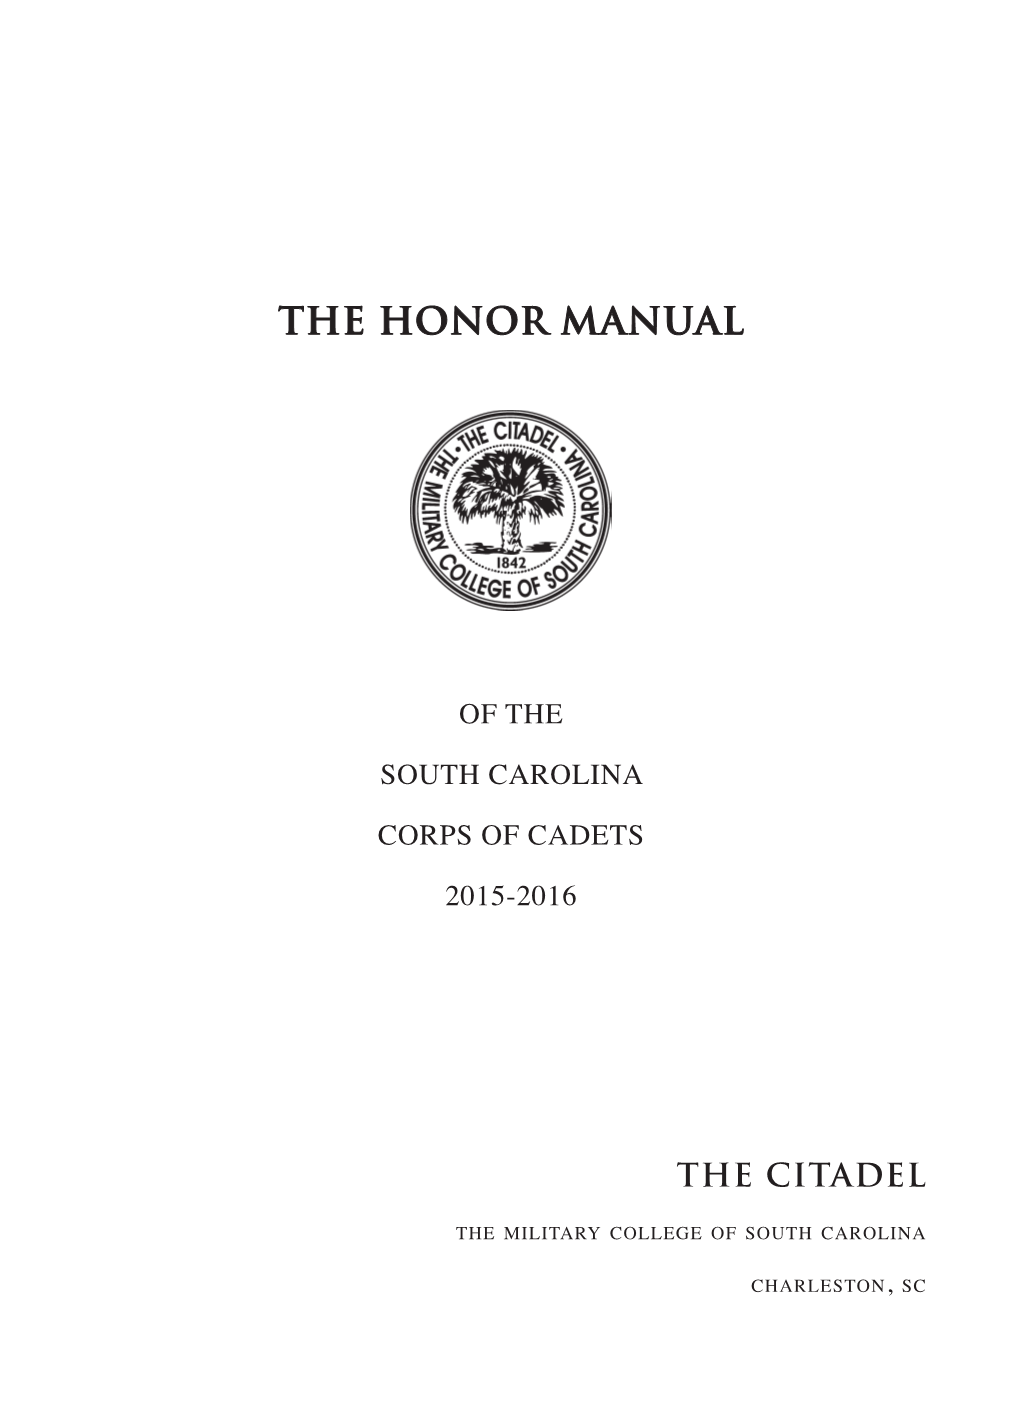 The Honor Manual